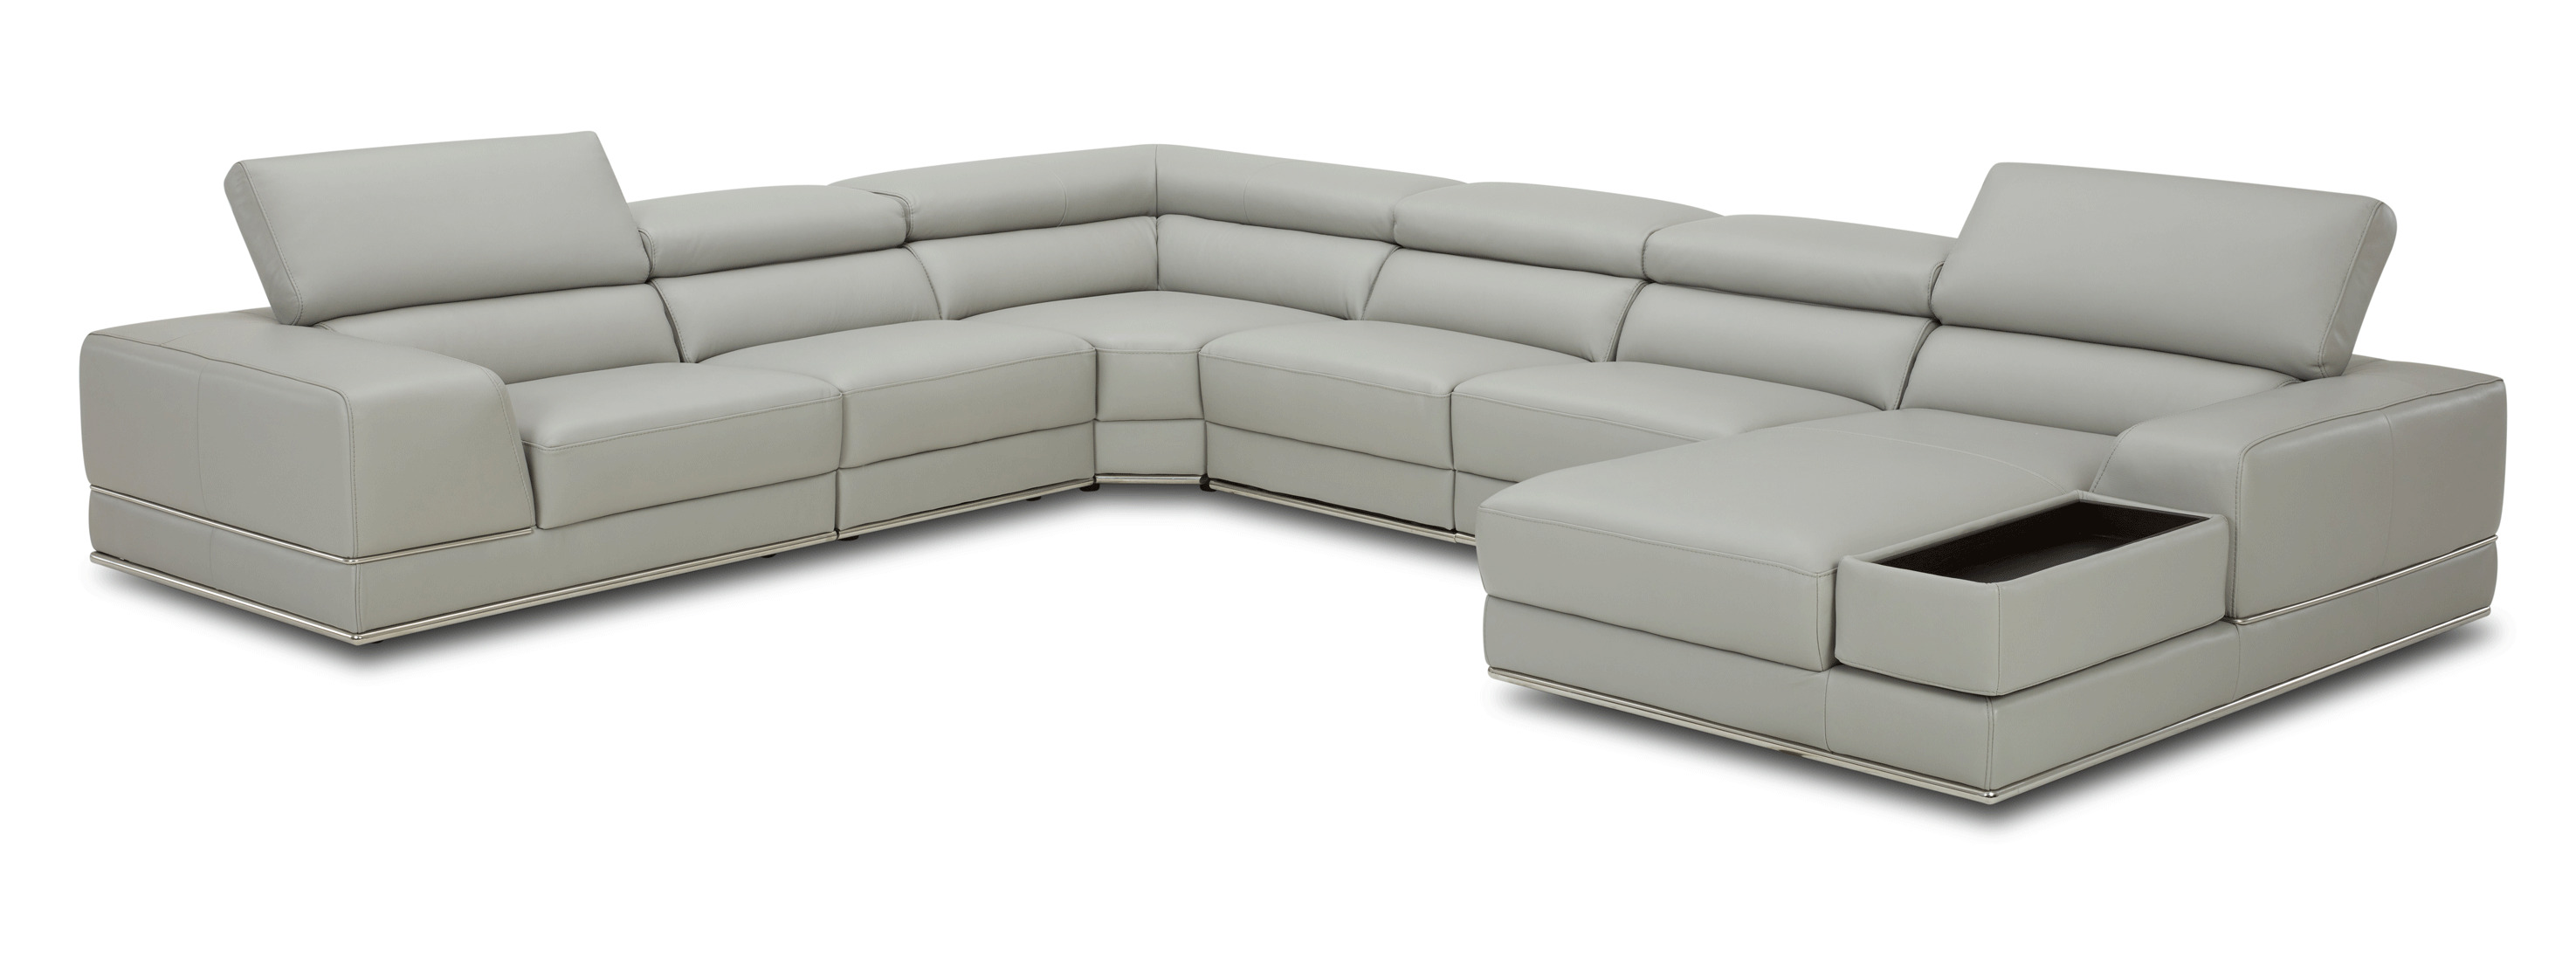 Elegant Italian Leather Living Room Furniture